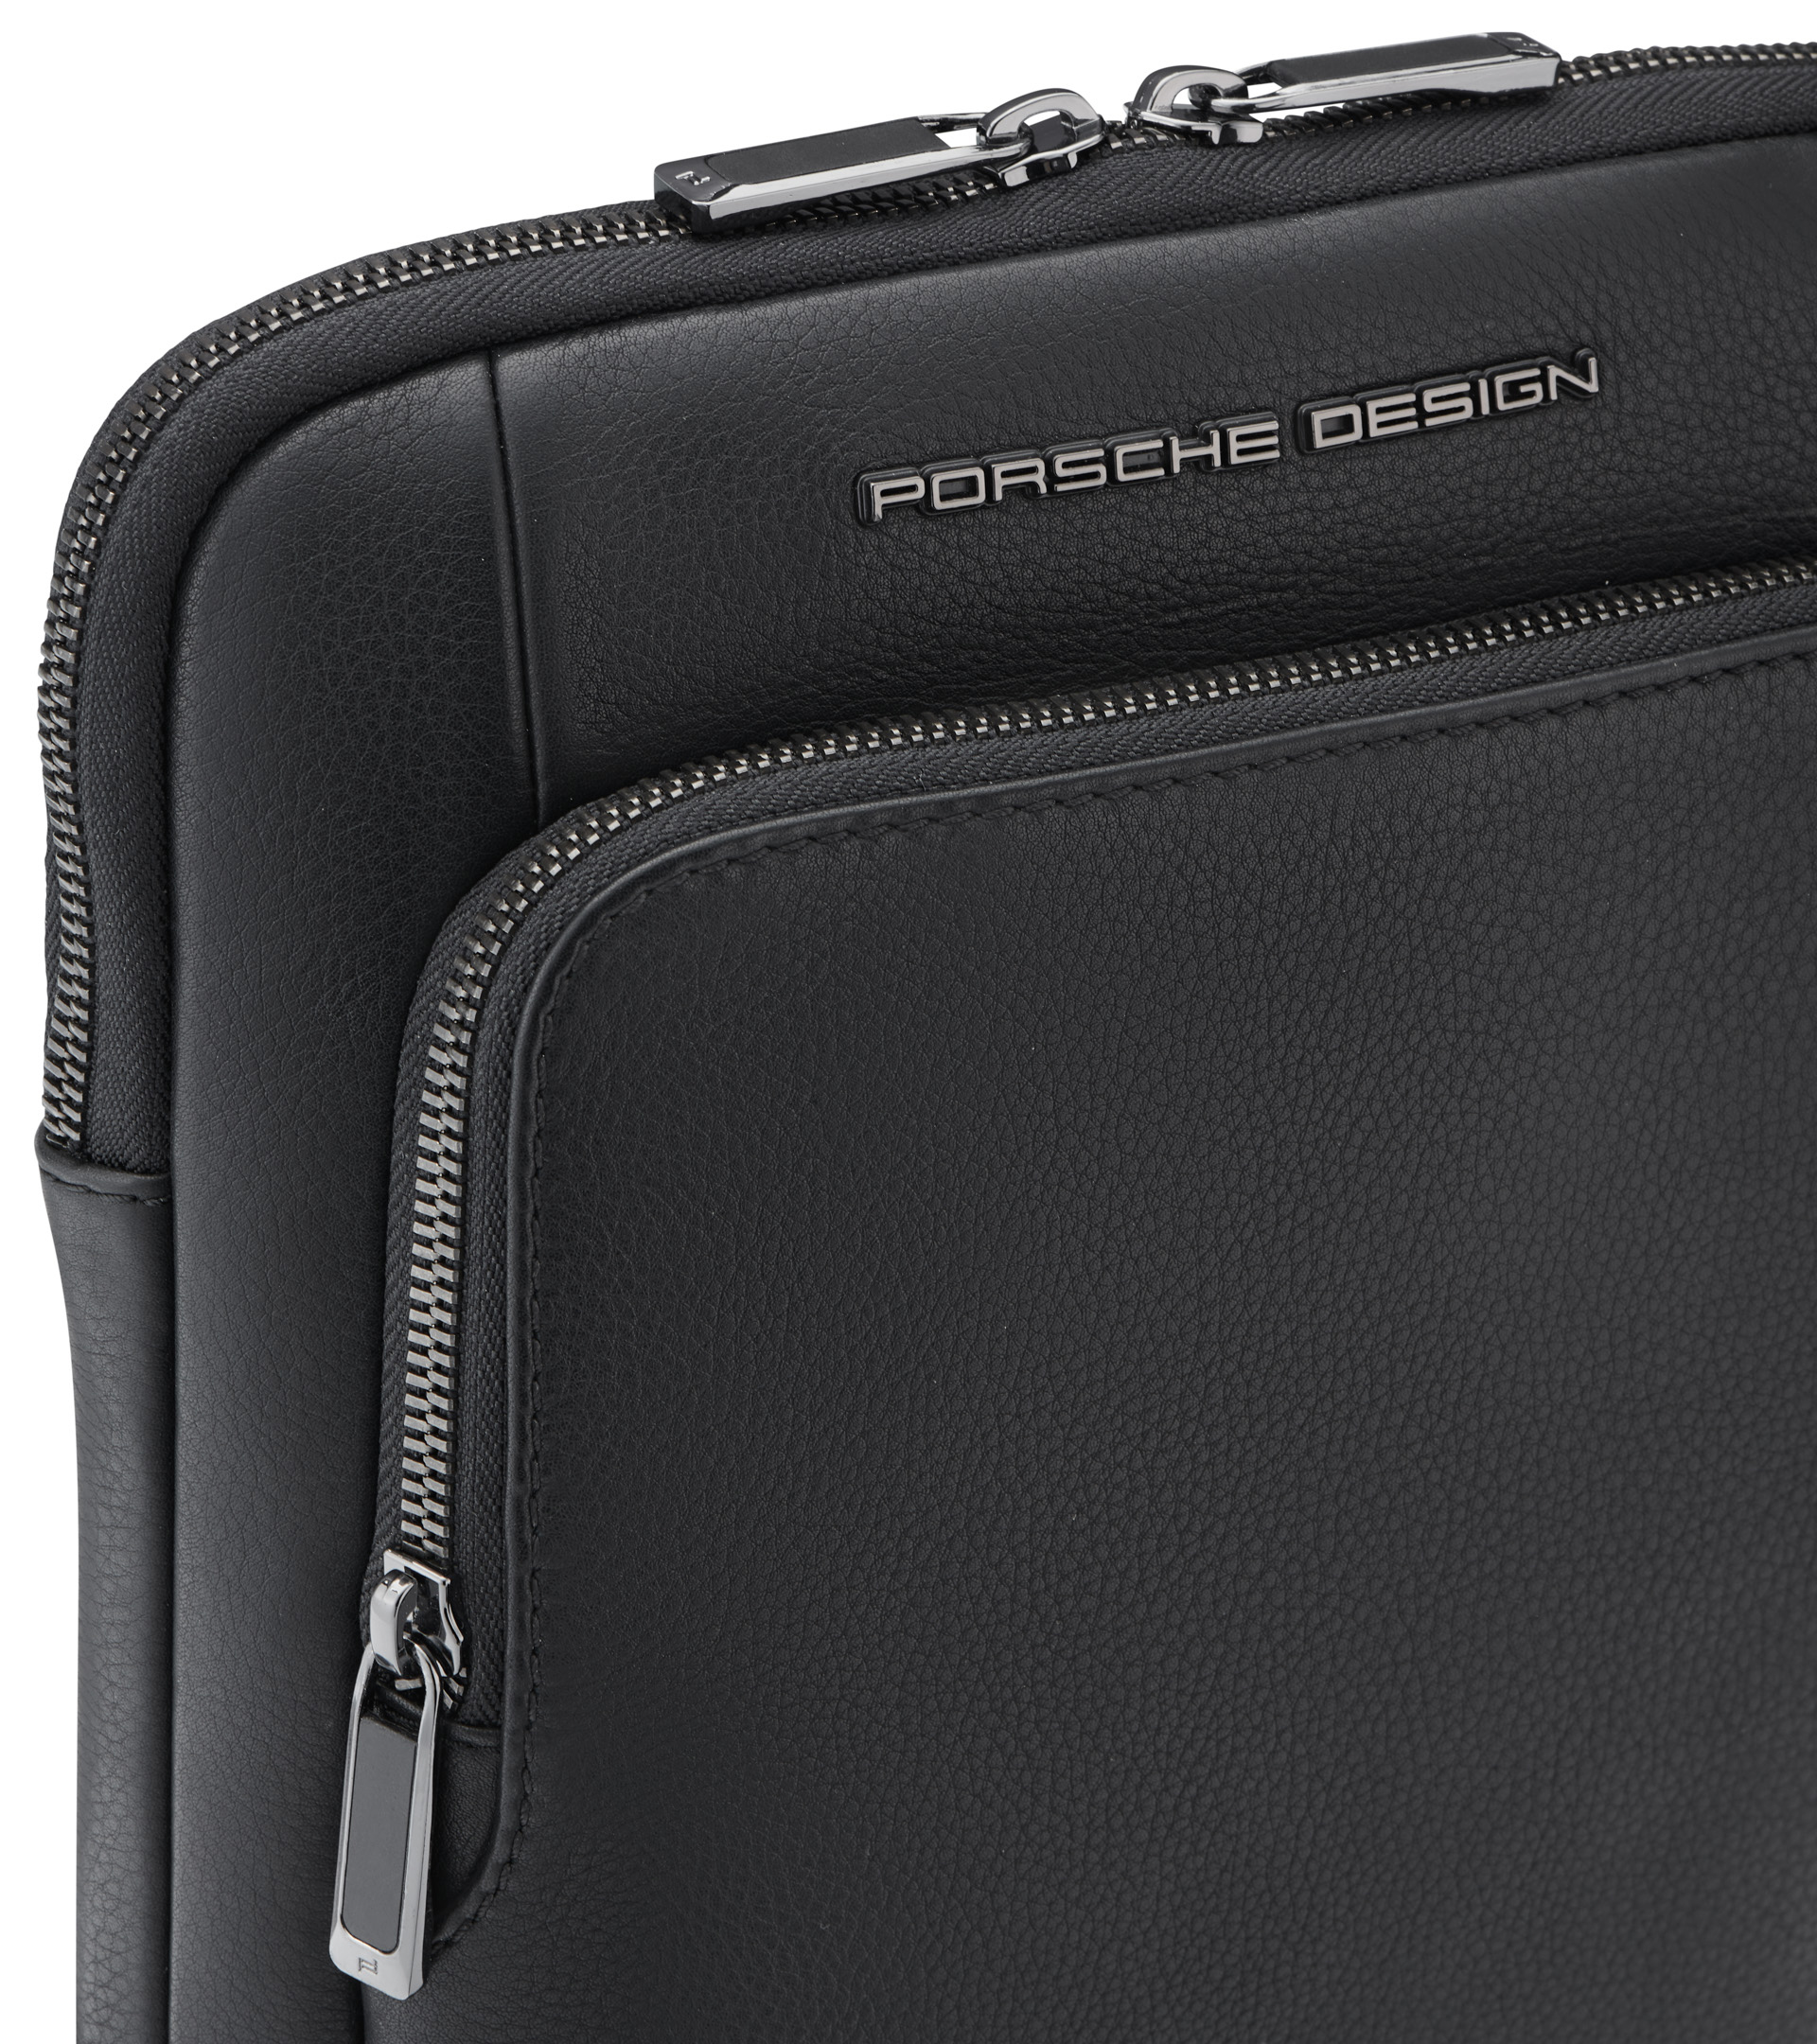 Porsche Design Bags editorial stock image. Image of hand - 47151594